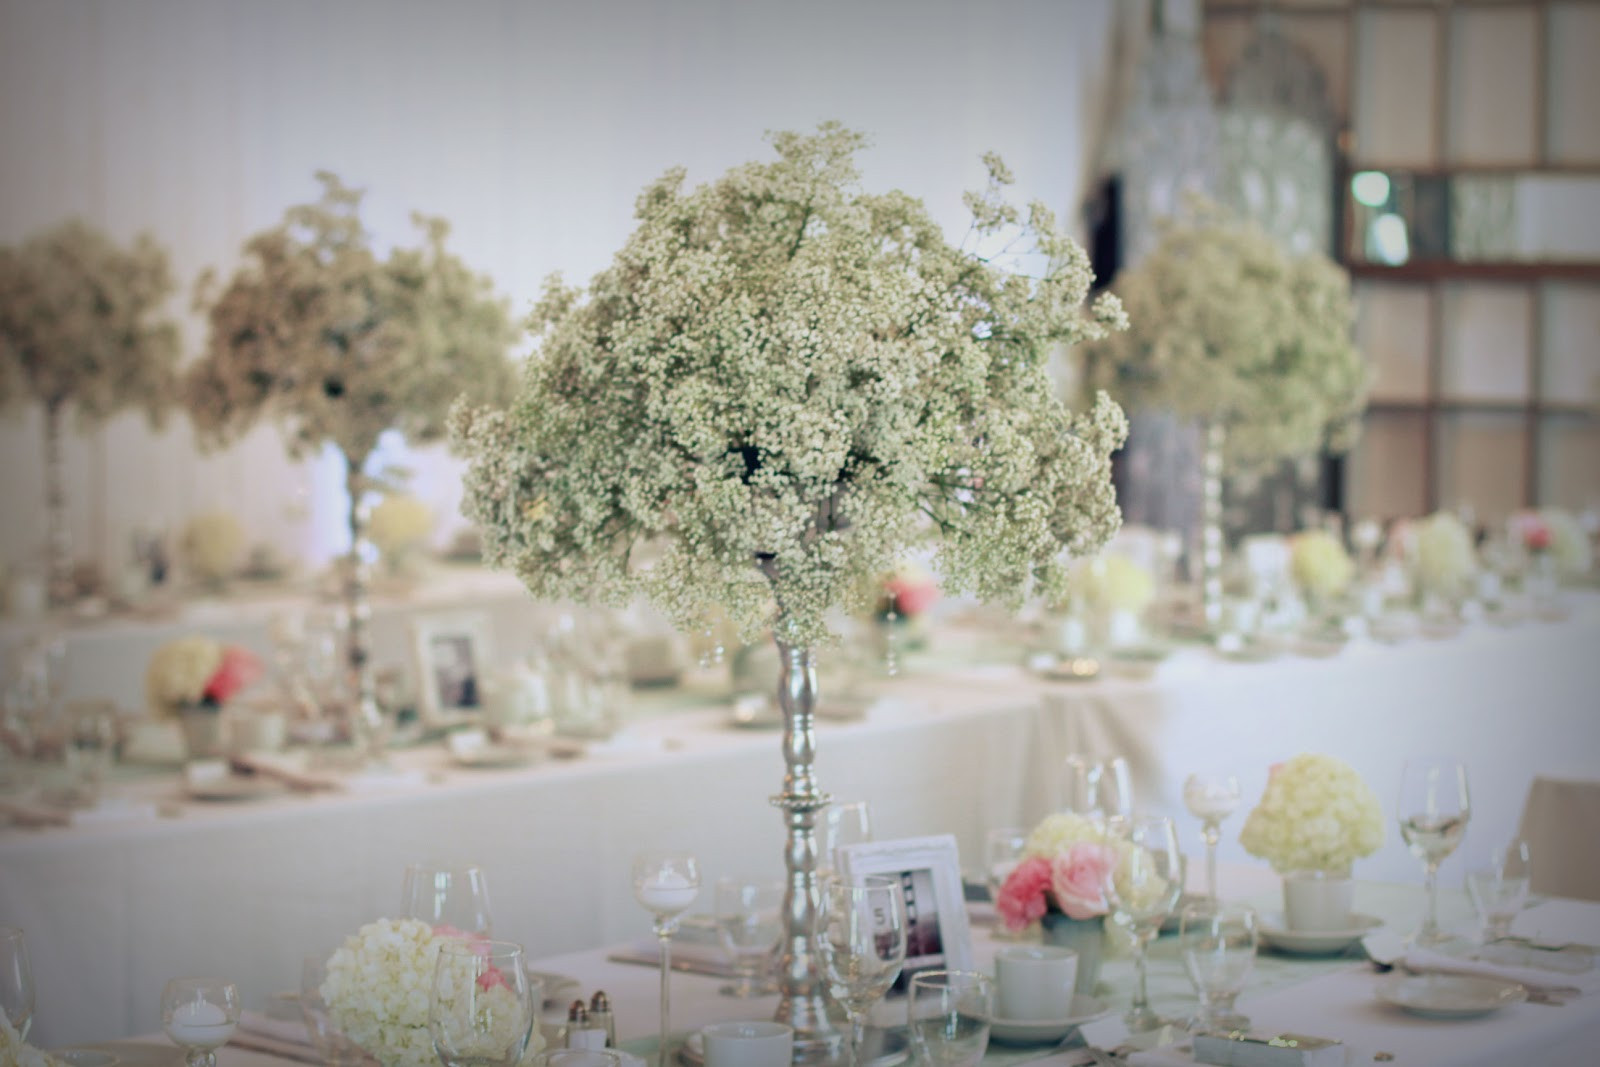 Best ideas about DIY Wedding Floral Centerpieces
. Save or Pin DIY Wedding Centerpieces Now.